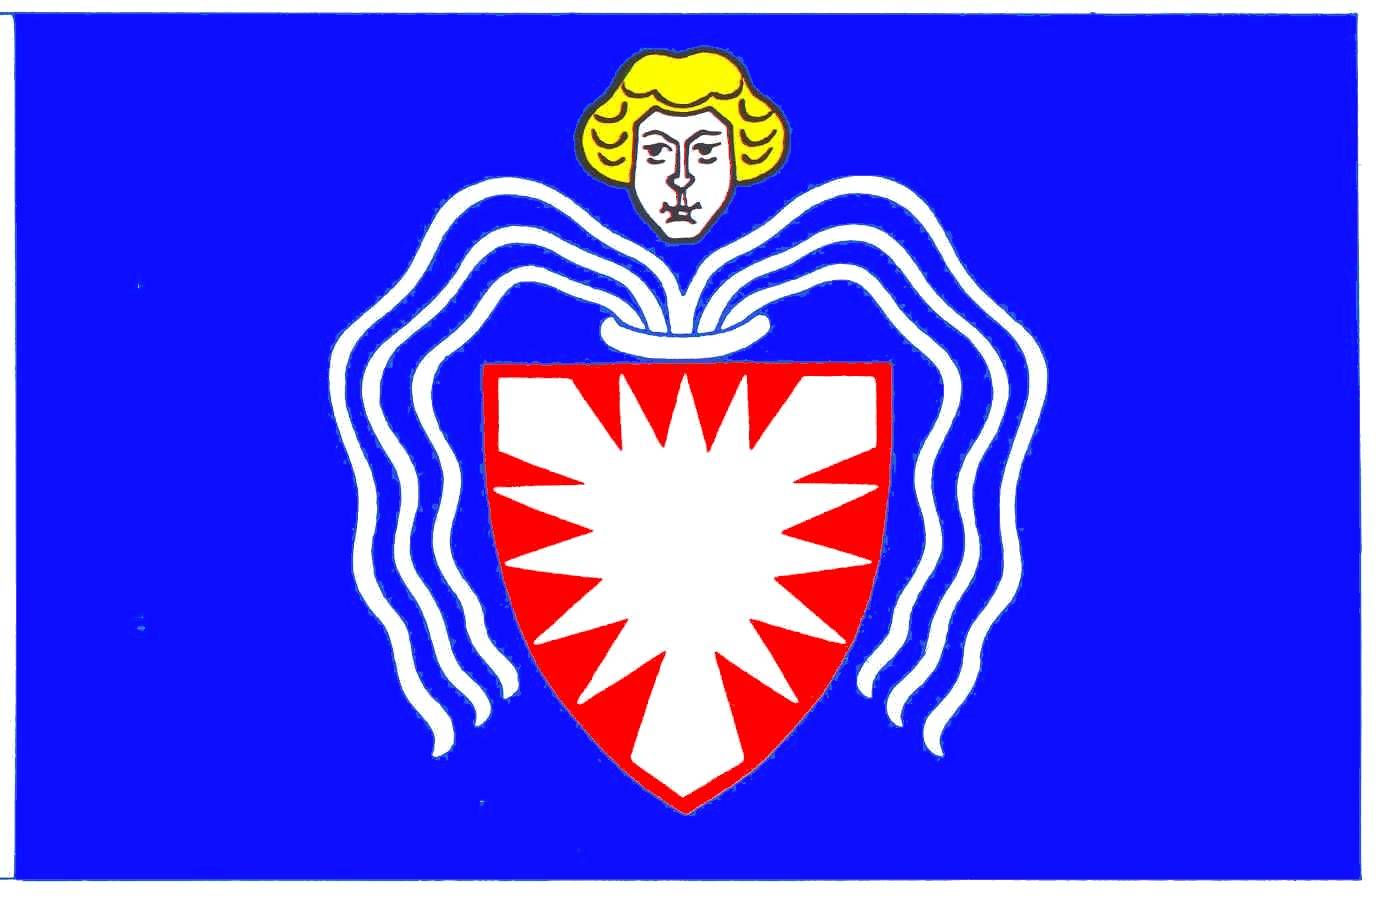 Flagge Gemeinde Bornhöved, Kreis Segeberg